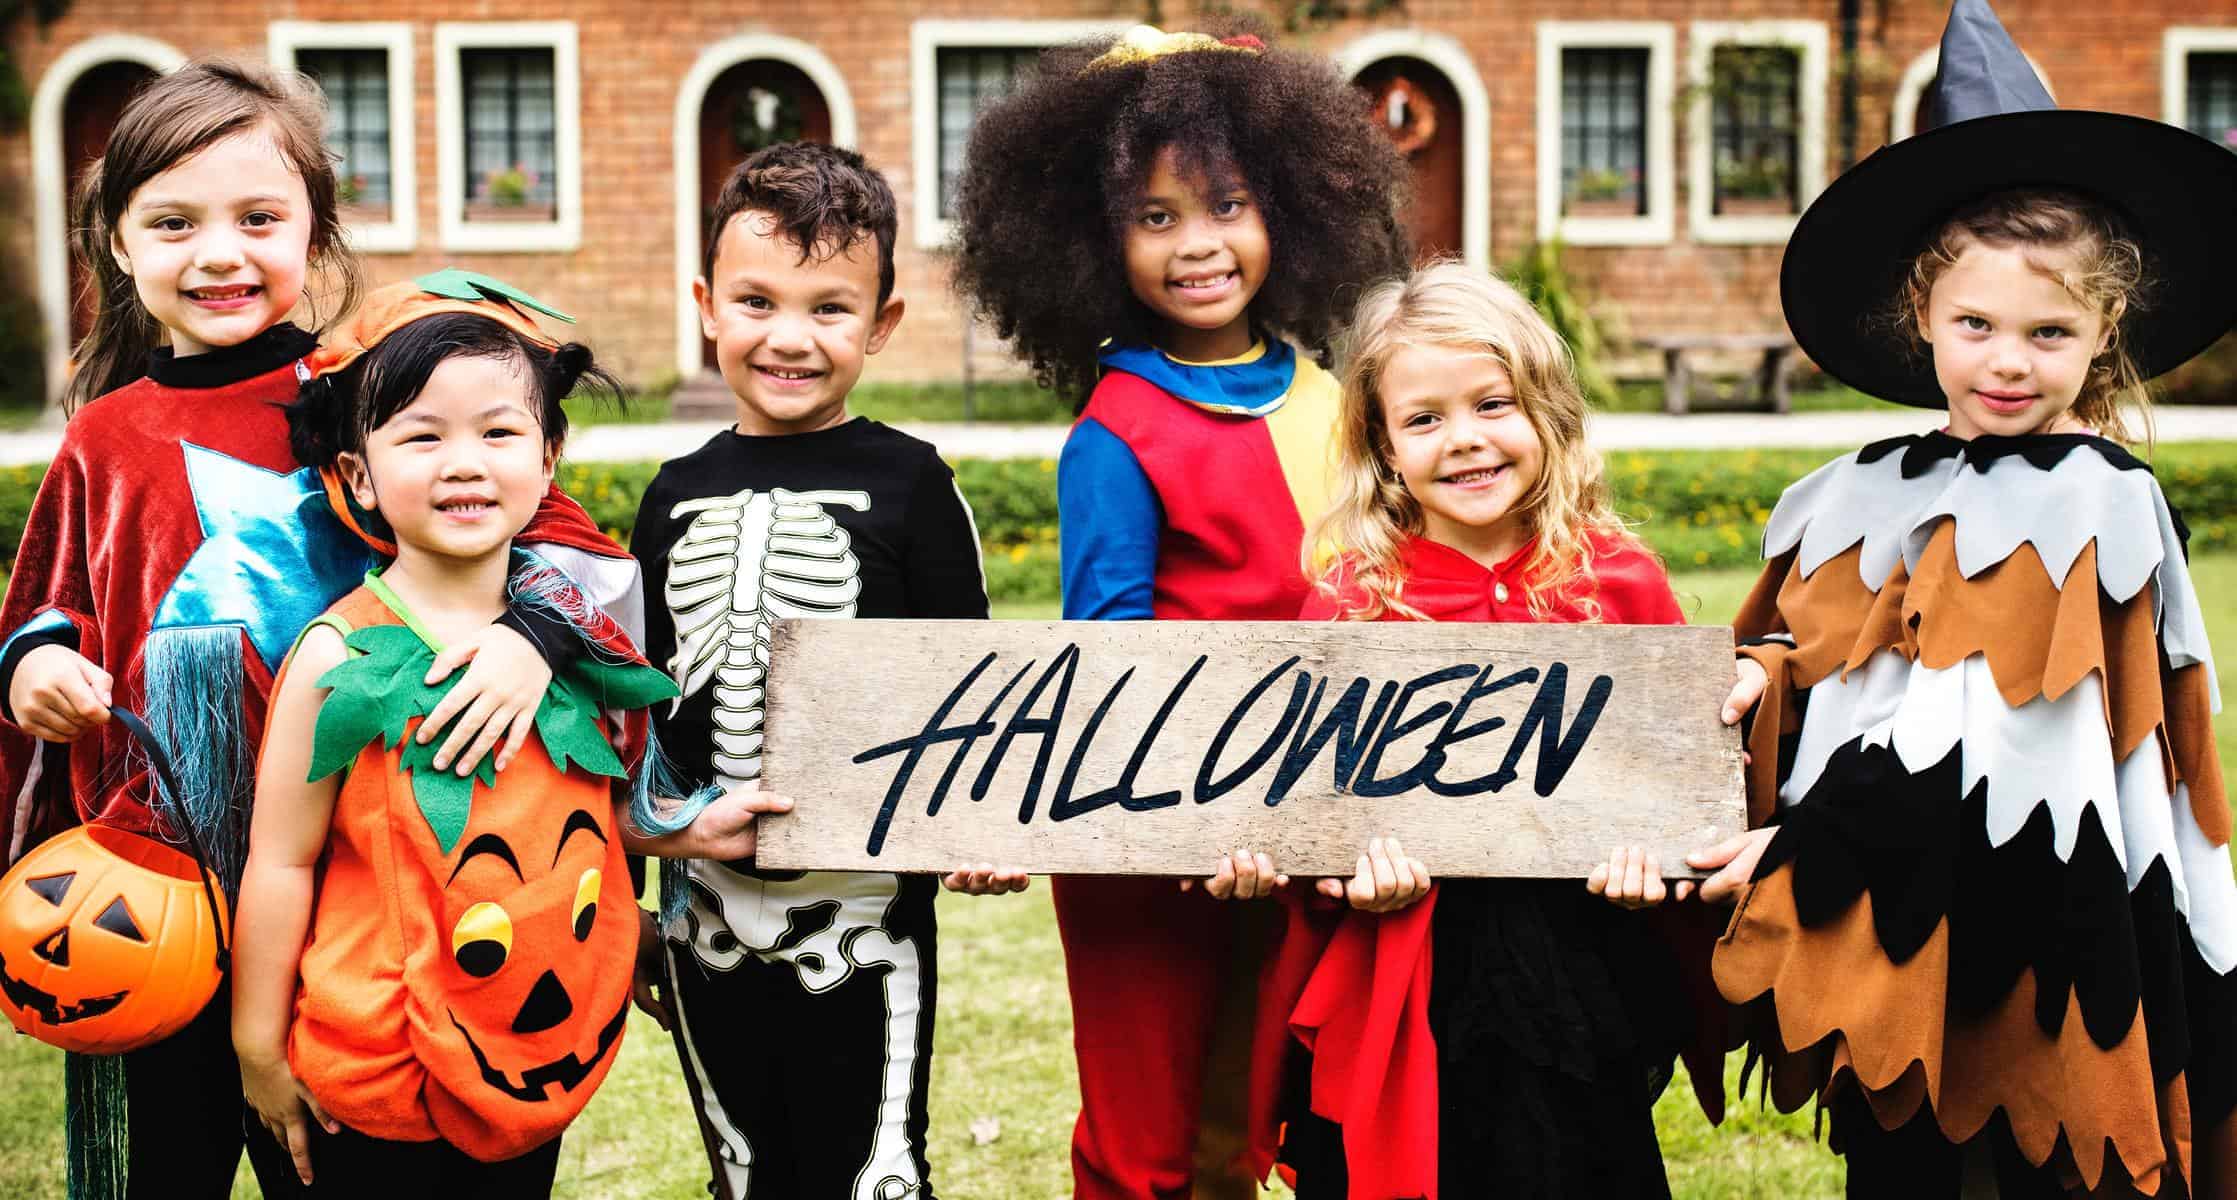 kids holding a halloween sign.  